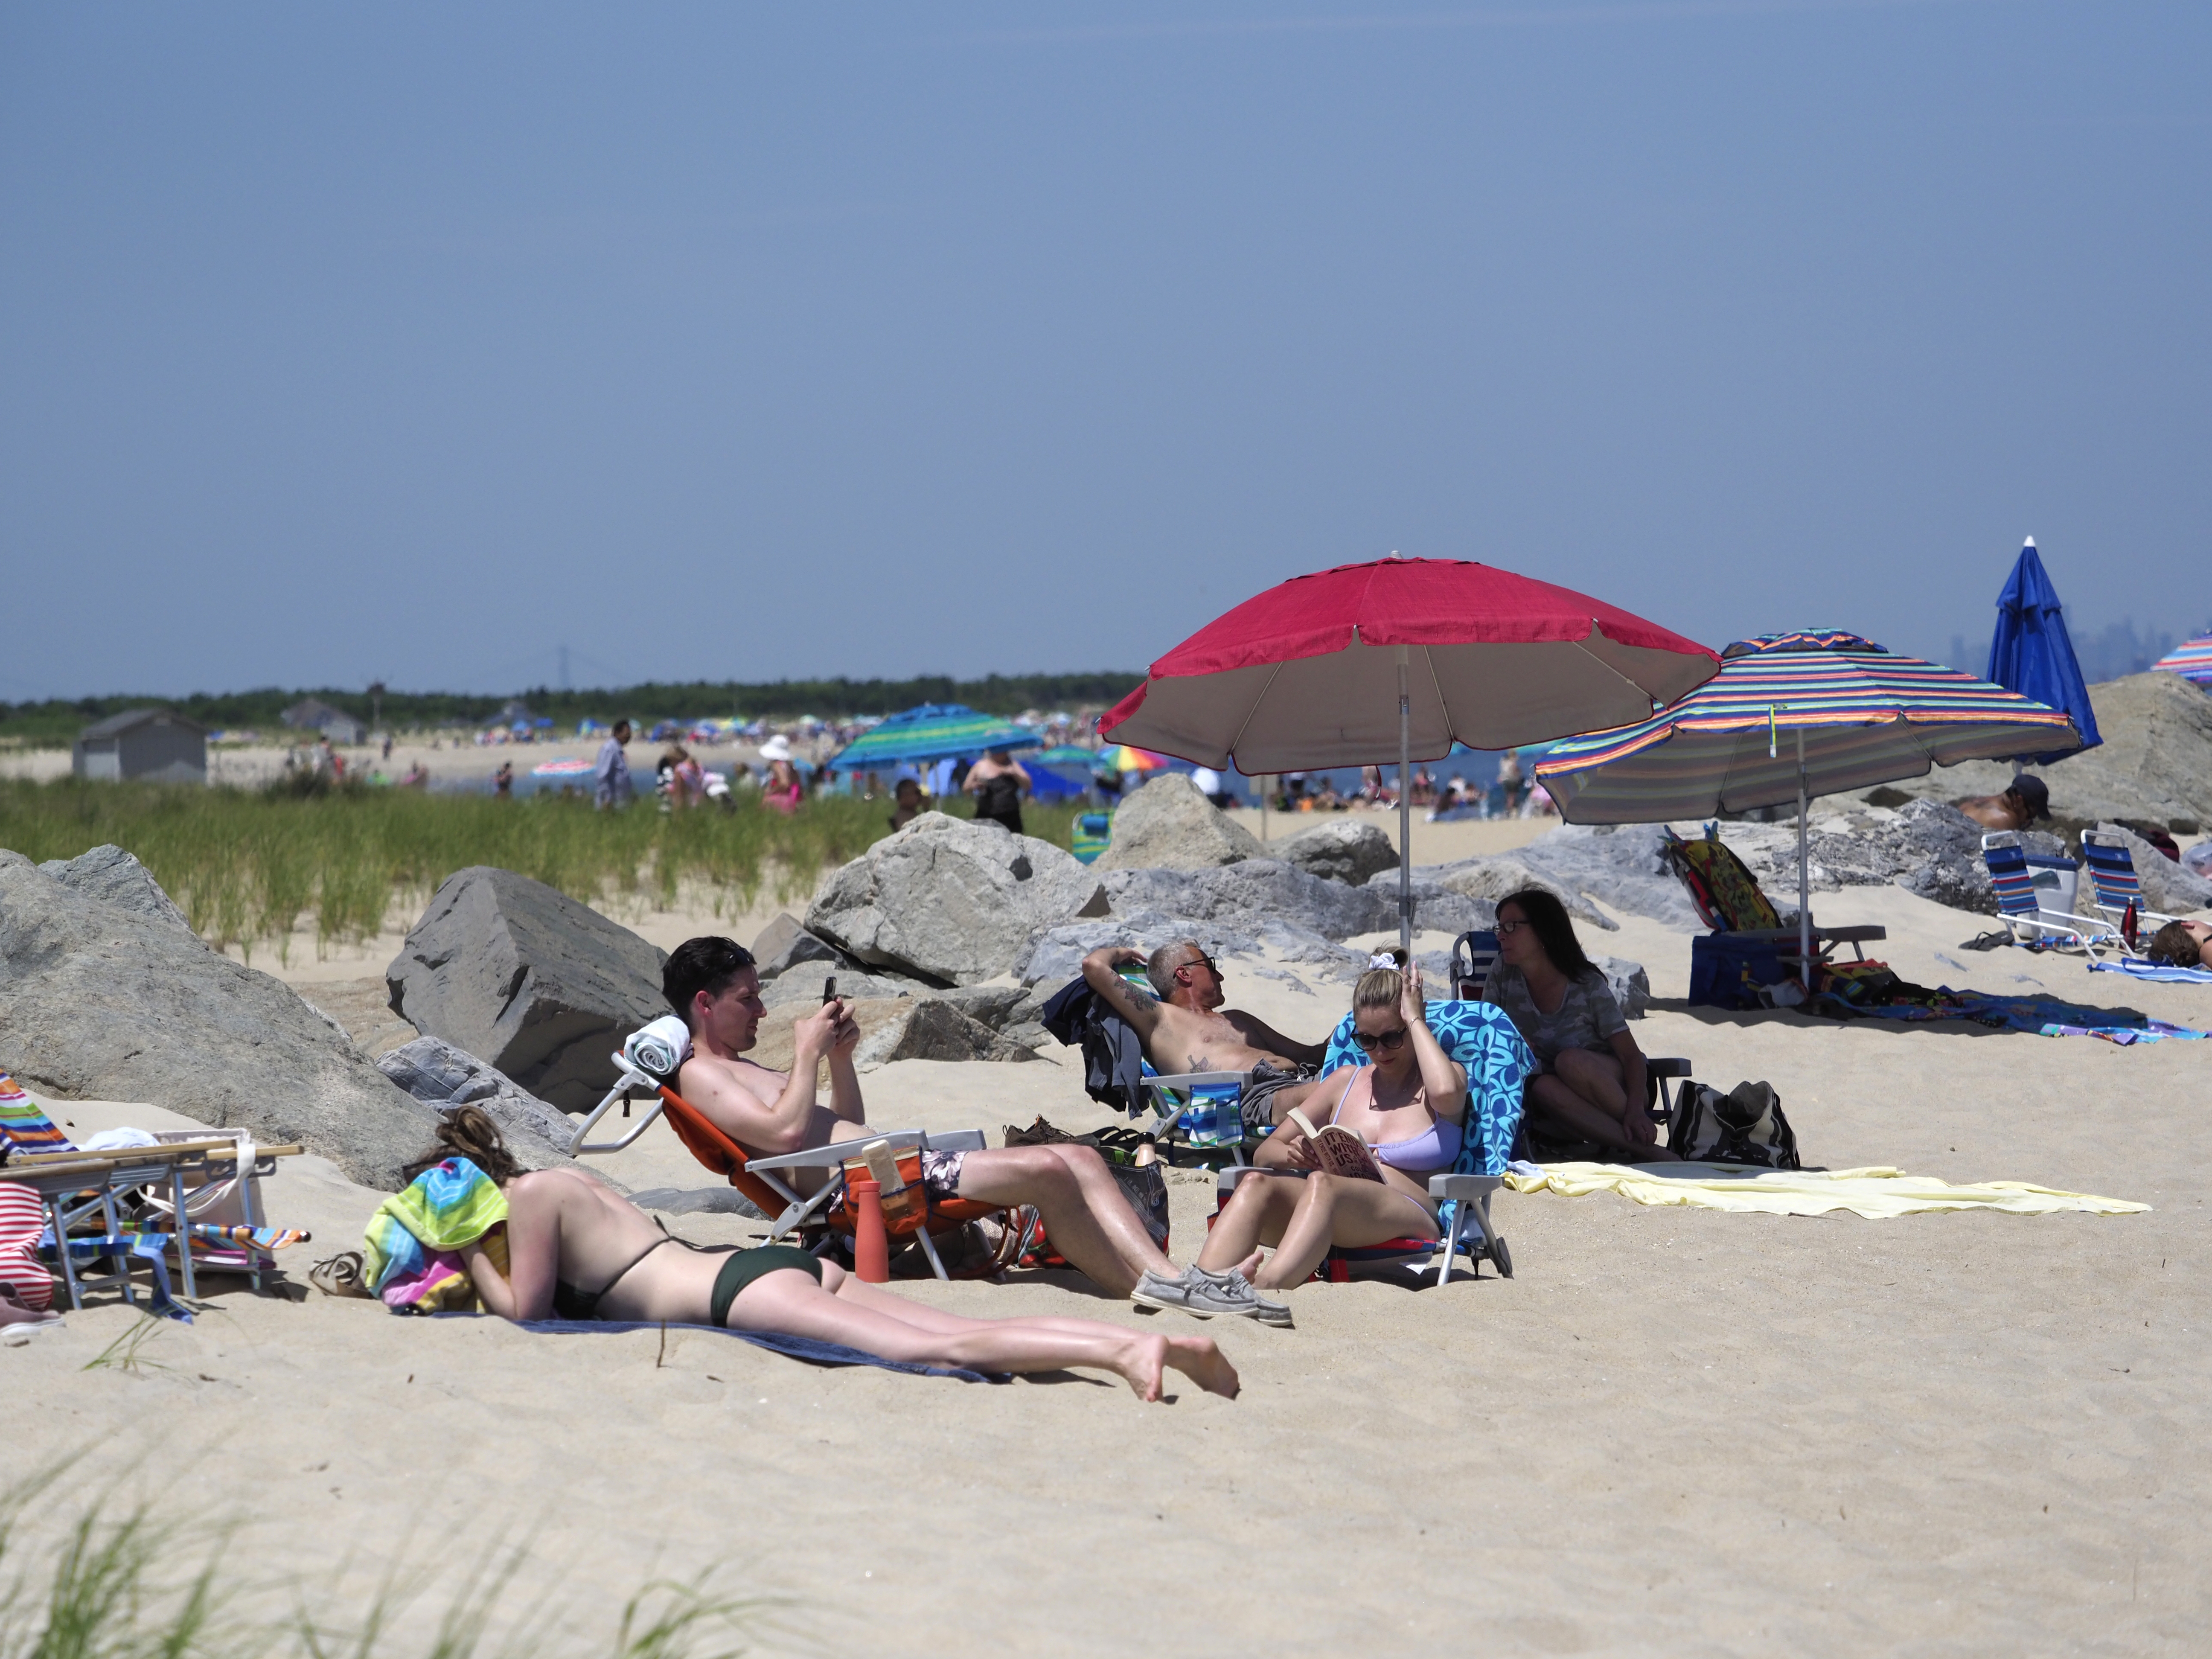 Nudist Survey - Top nude beach list names New Jersey spot among best worldwide - silive.com